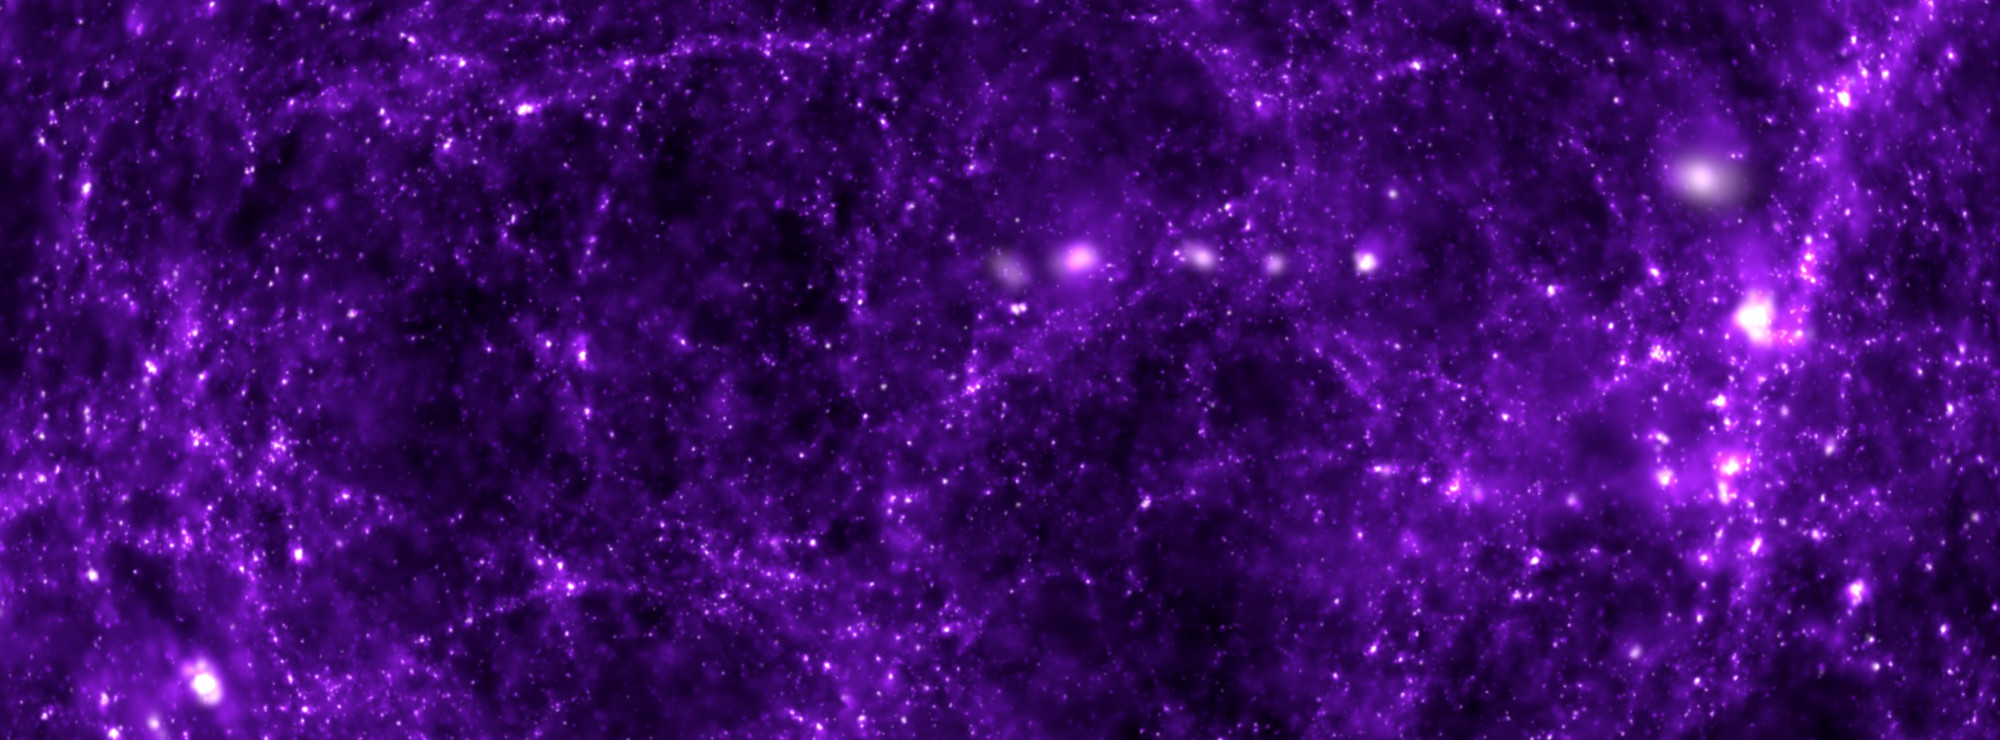 Vårt energirika universum. Bild: Space Telescope Science Institute, UC Berkeley and Harward University.